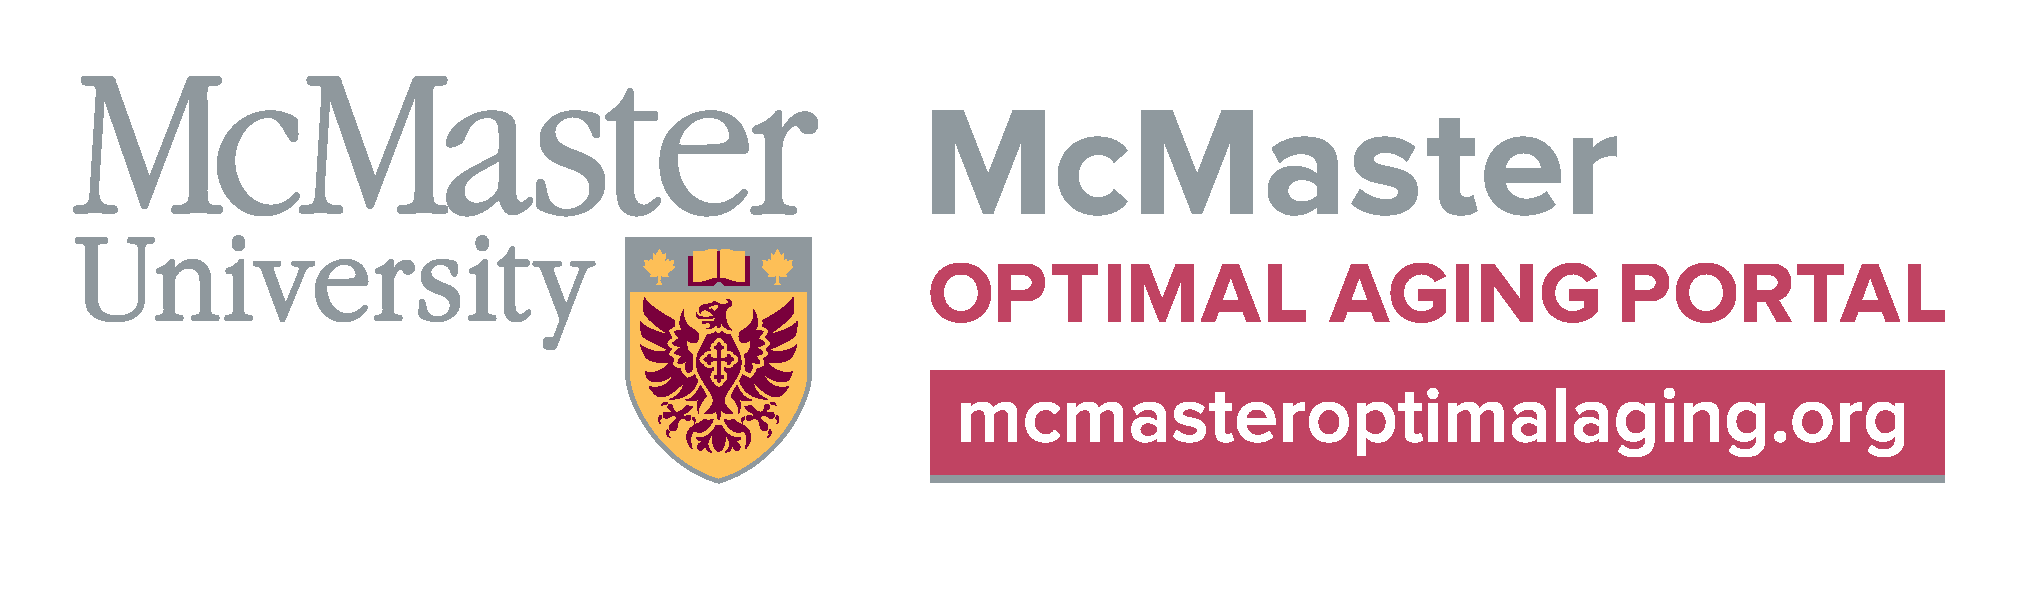 McMaster Optimal Aging Portal